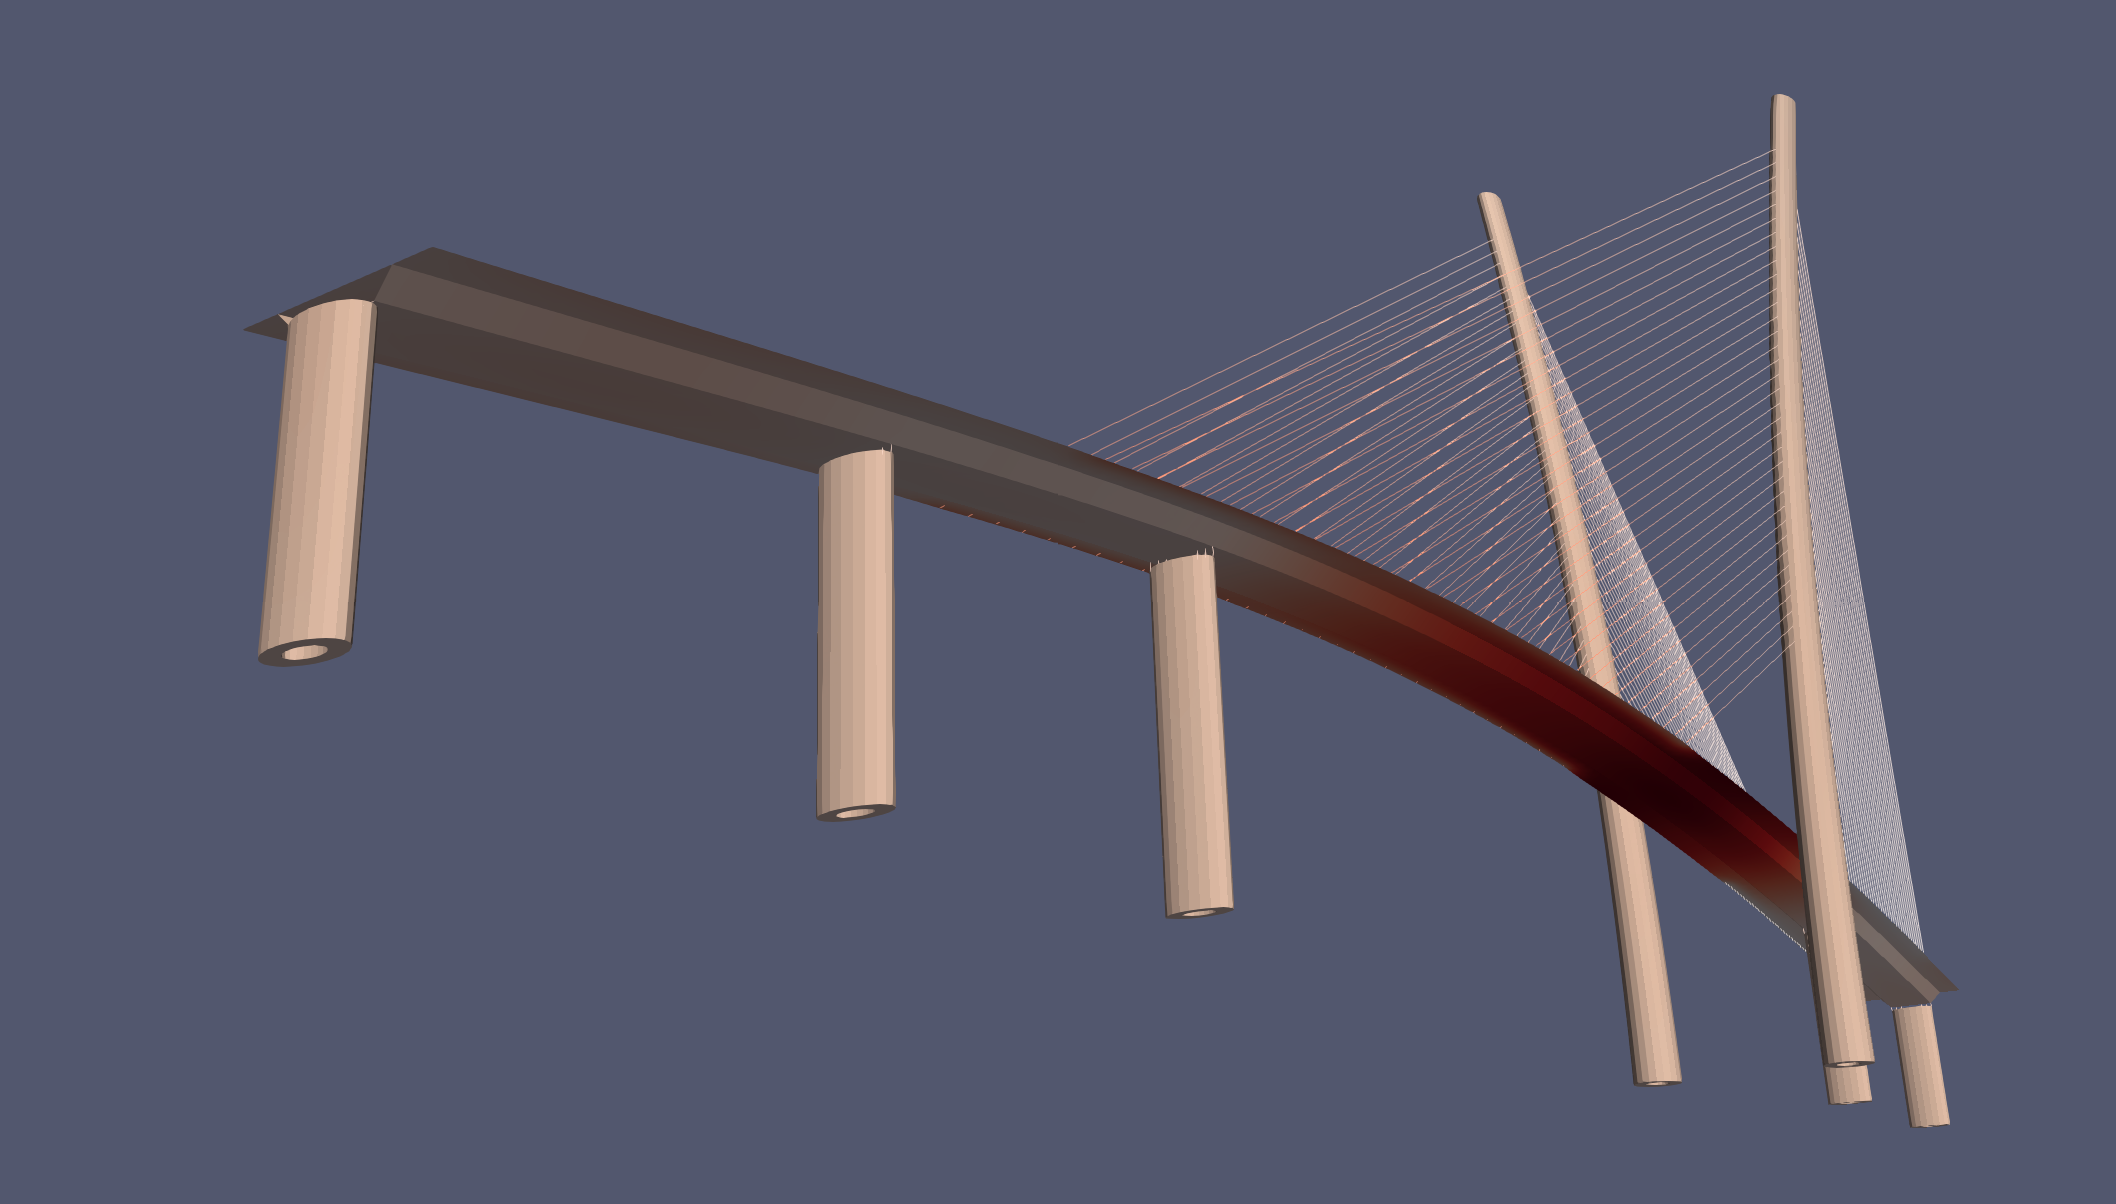 Cable stayed bridge. Finite element analysis.